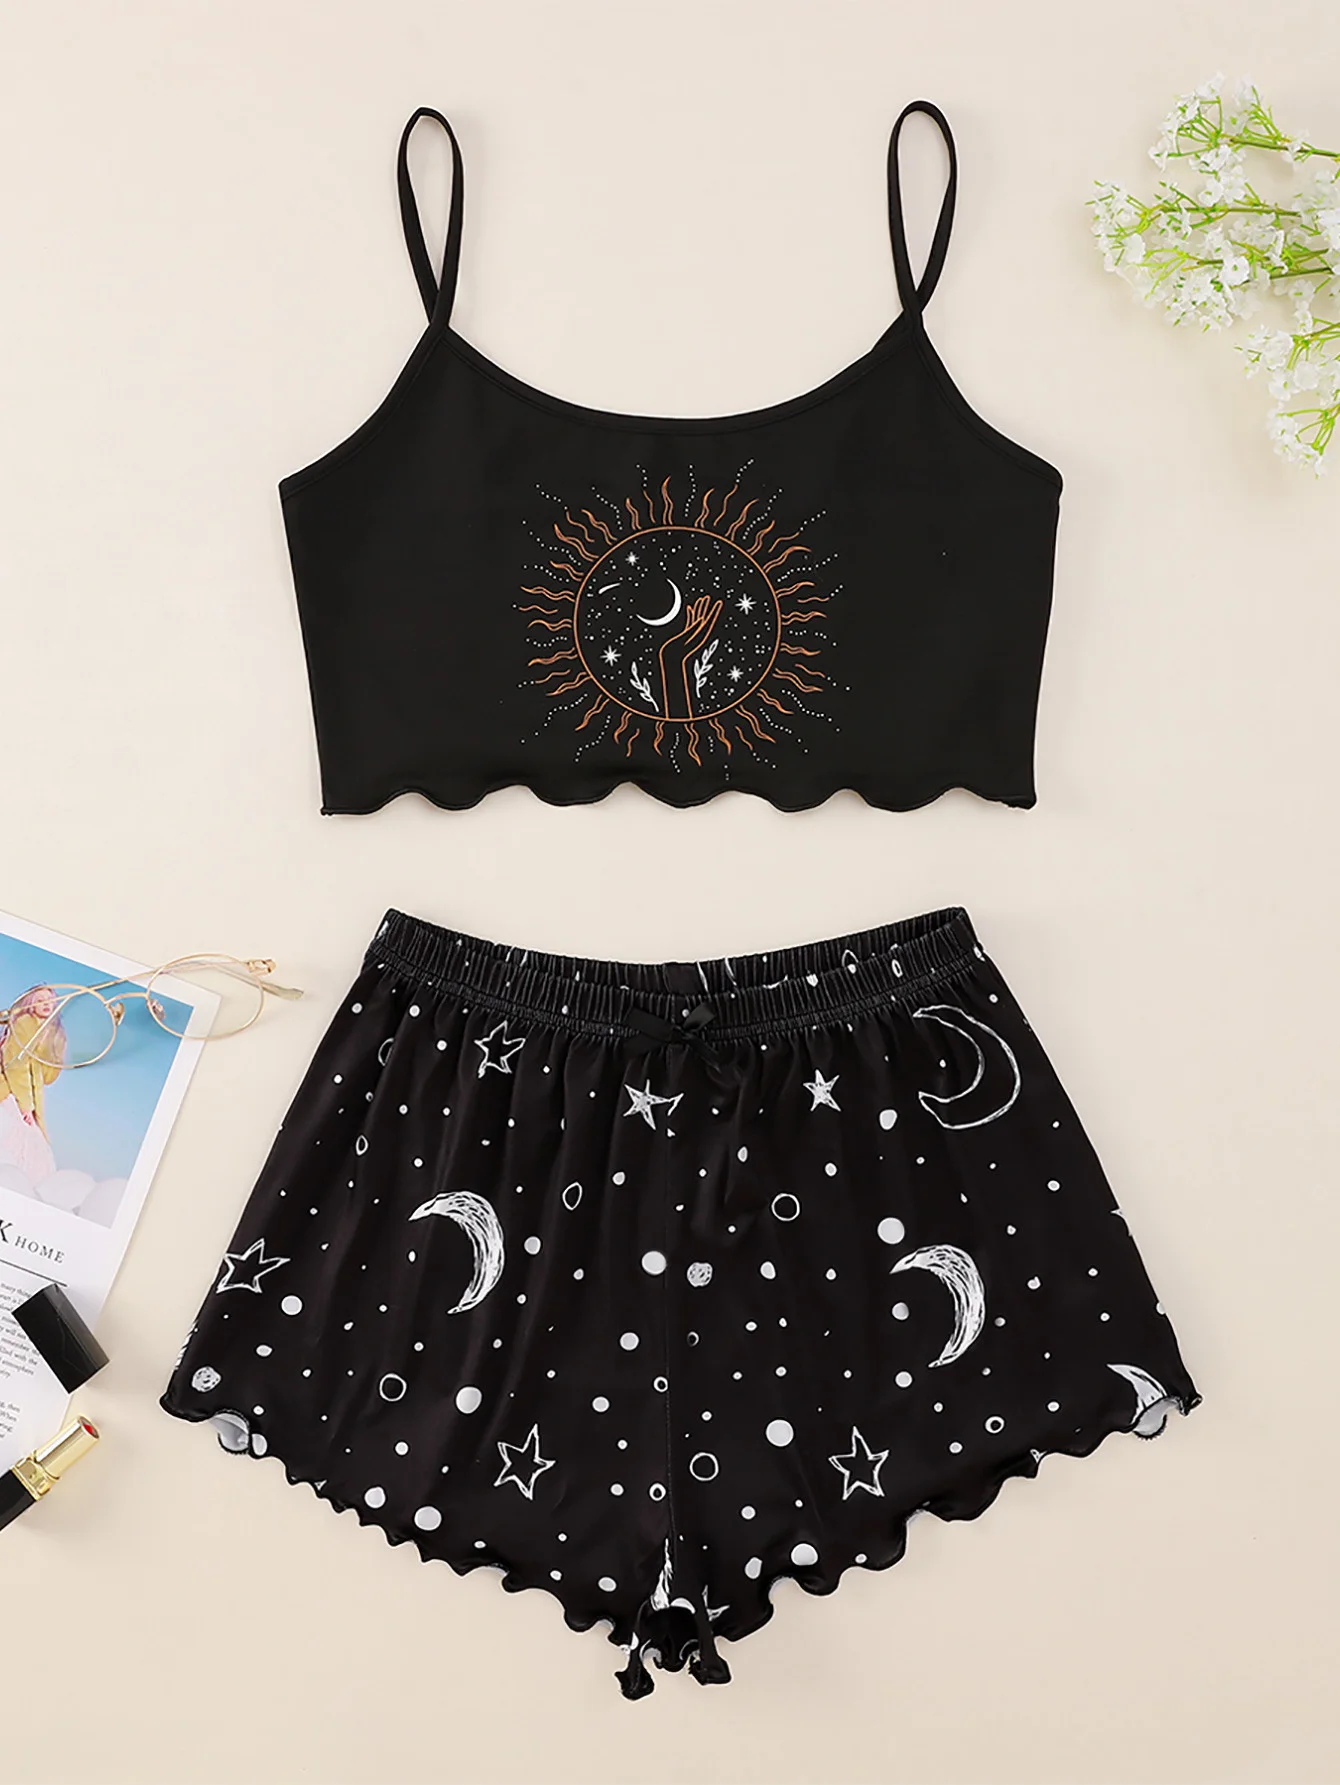 

New Style Lady’s Summer Cartoon Moon And Star Print Camisole With Silks Shorts Pajama Set Home Wear Sleepwear Underwear